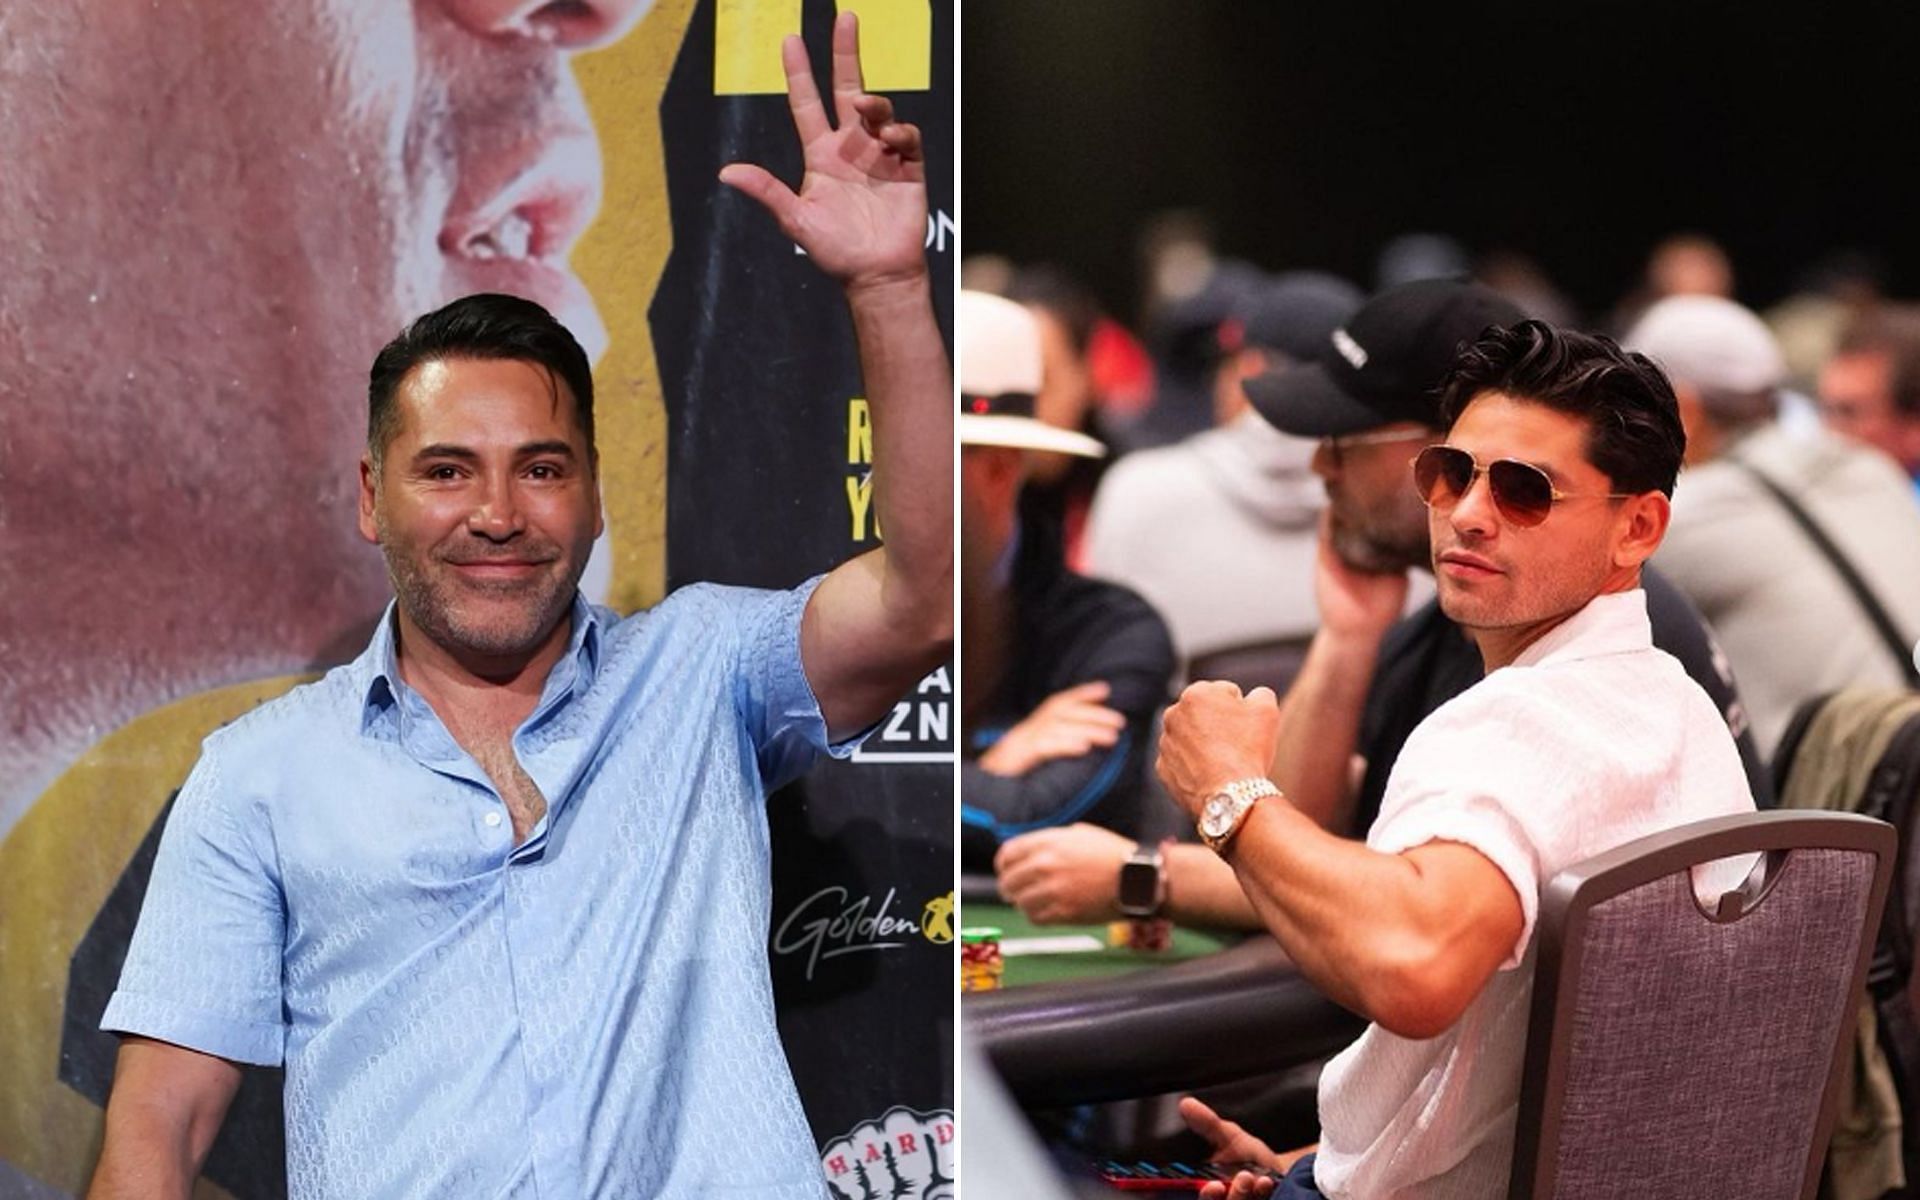 Oscar De La Hoya [L] and Ryan Garcia [R] [Images via @oscardelahoya and @kingryan Instagram]